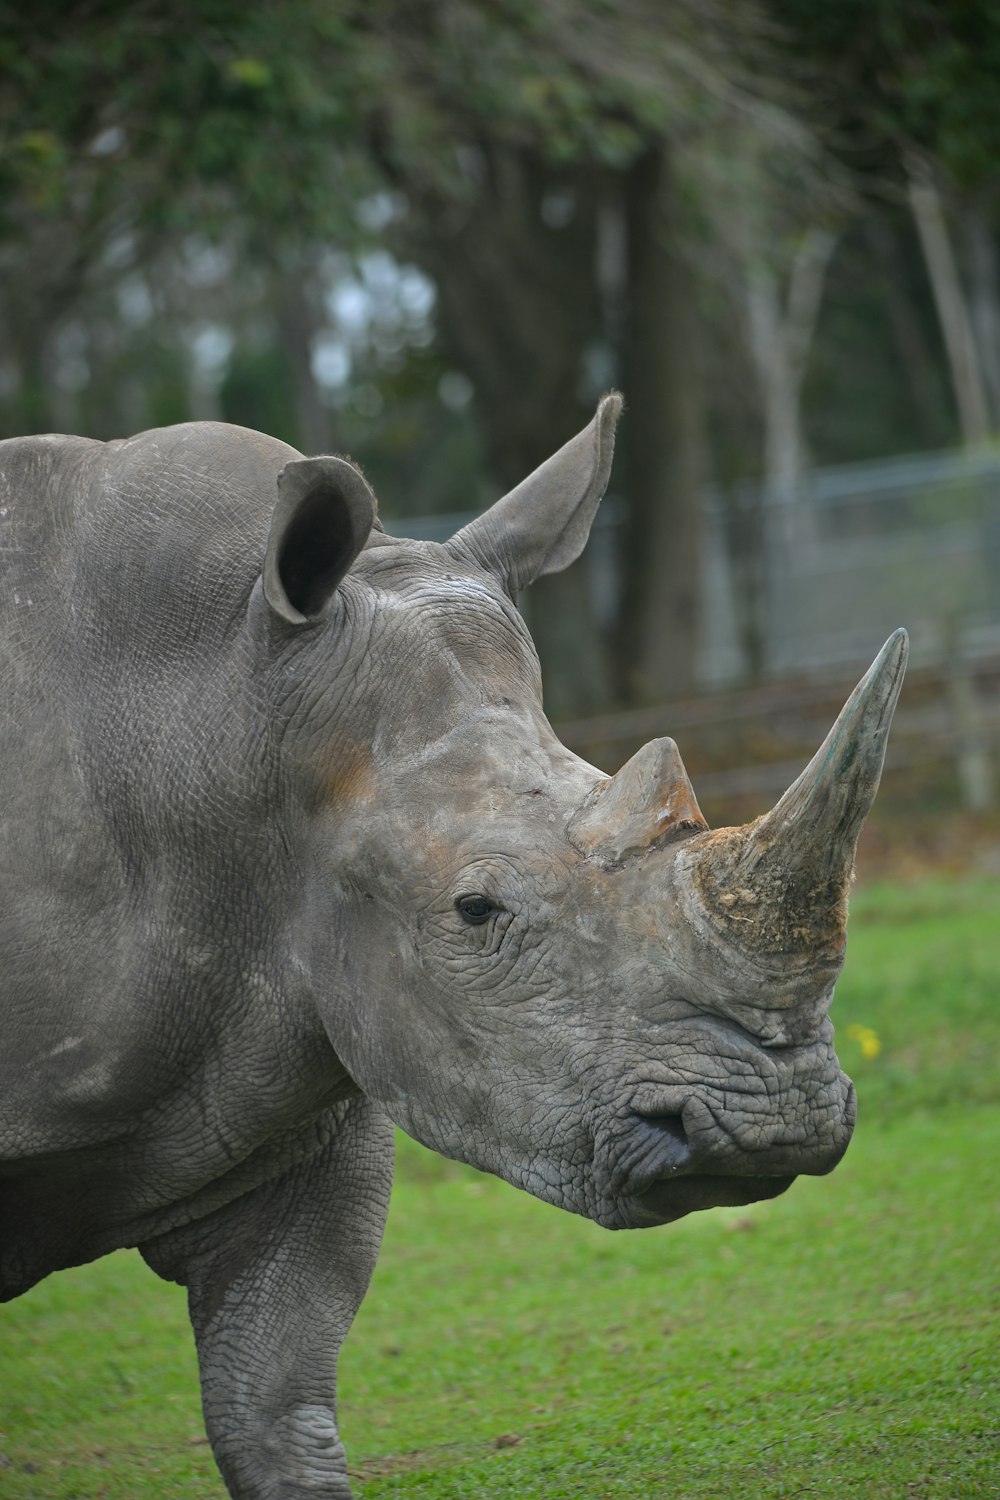 grey rhinoceros on green grass field during daytime